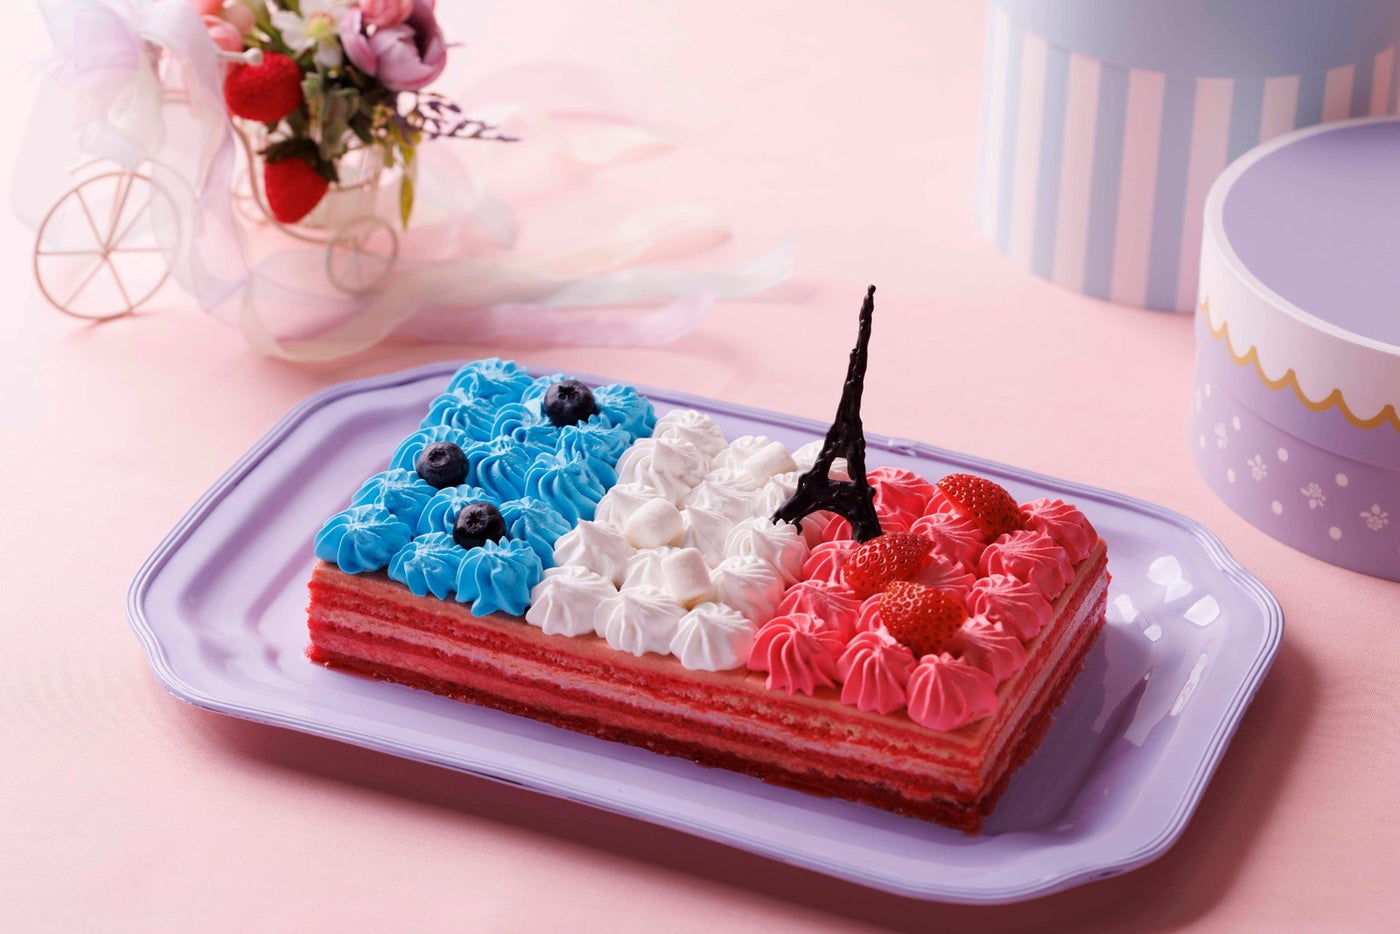 Strawberry meets Paris／画像提供：東京ベイヒルトン